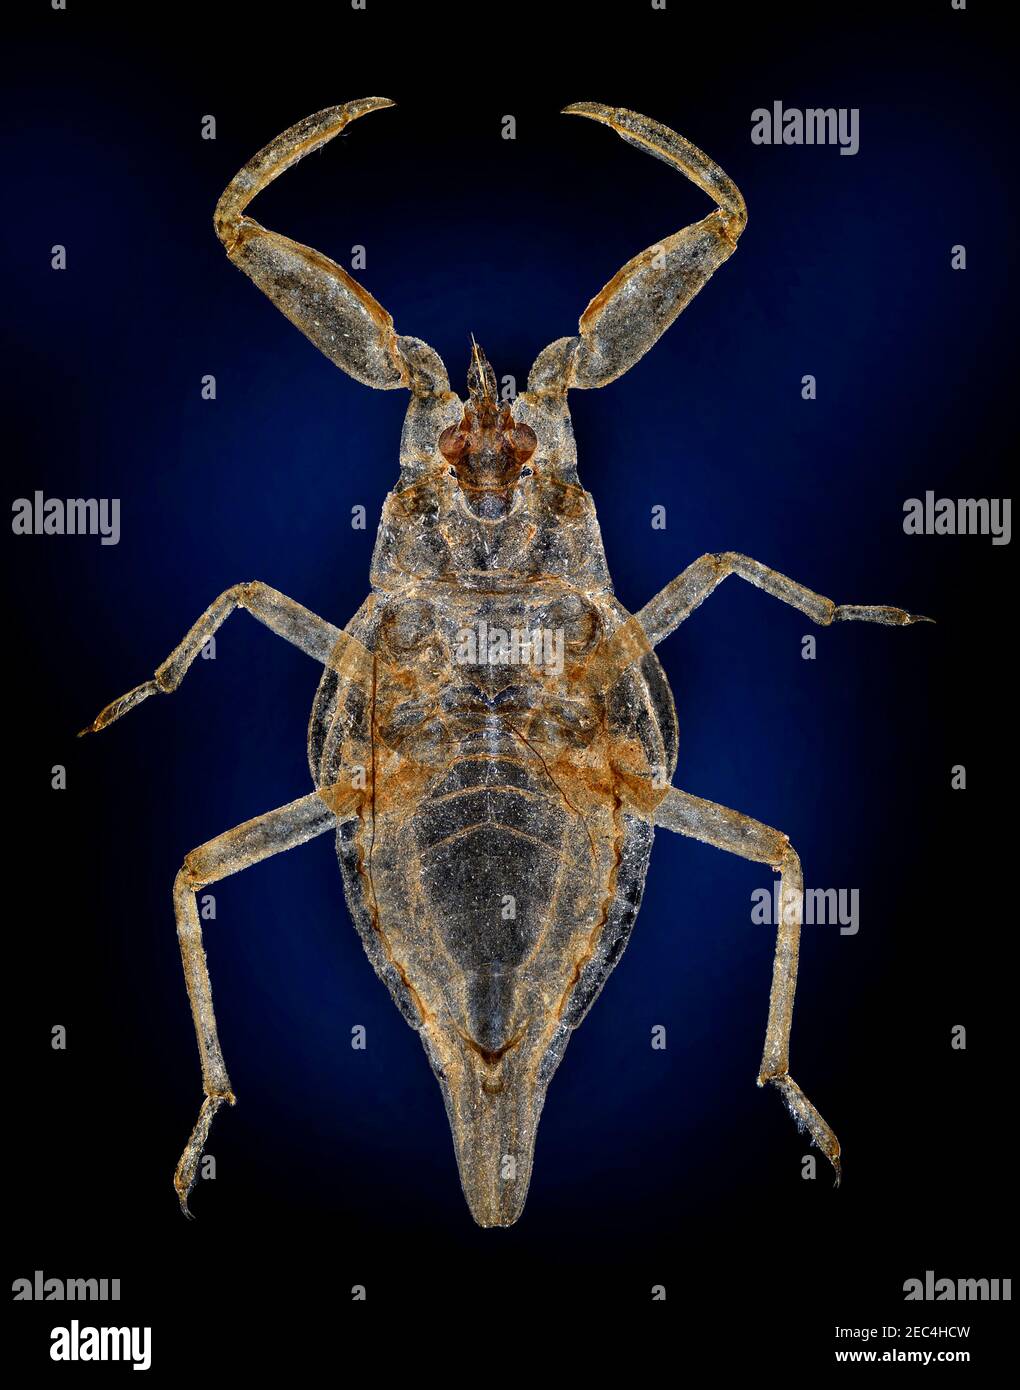 Water scorpion, Nepa cinerea, early stage nymph, darkfield illumination Stock Photo